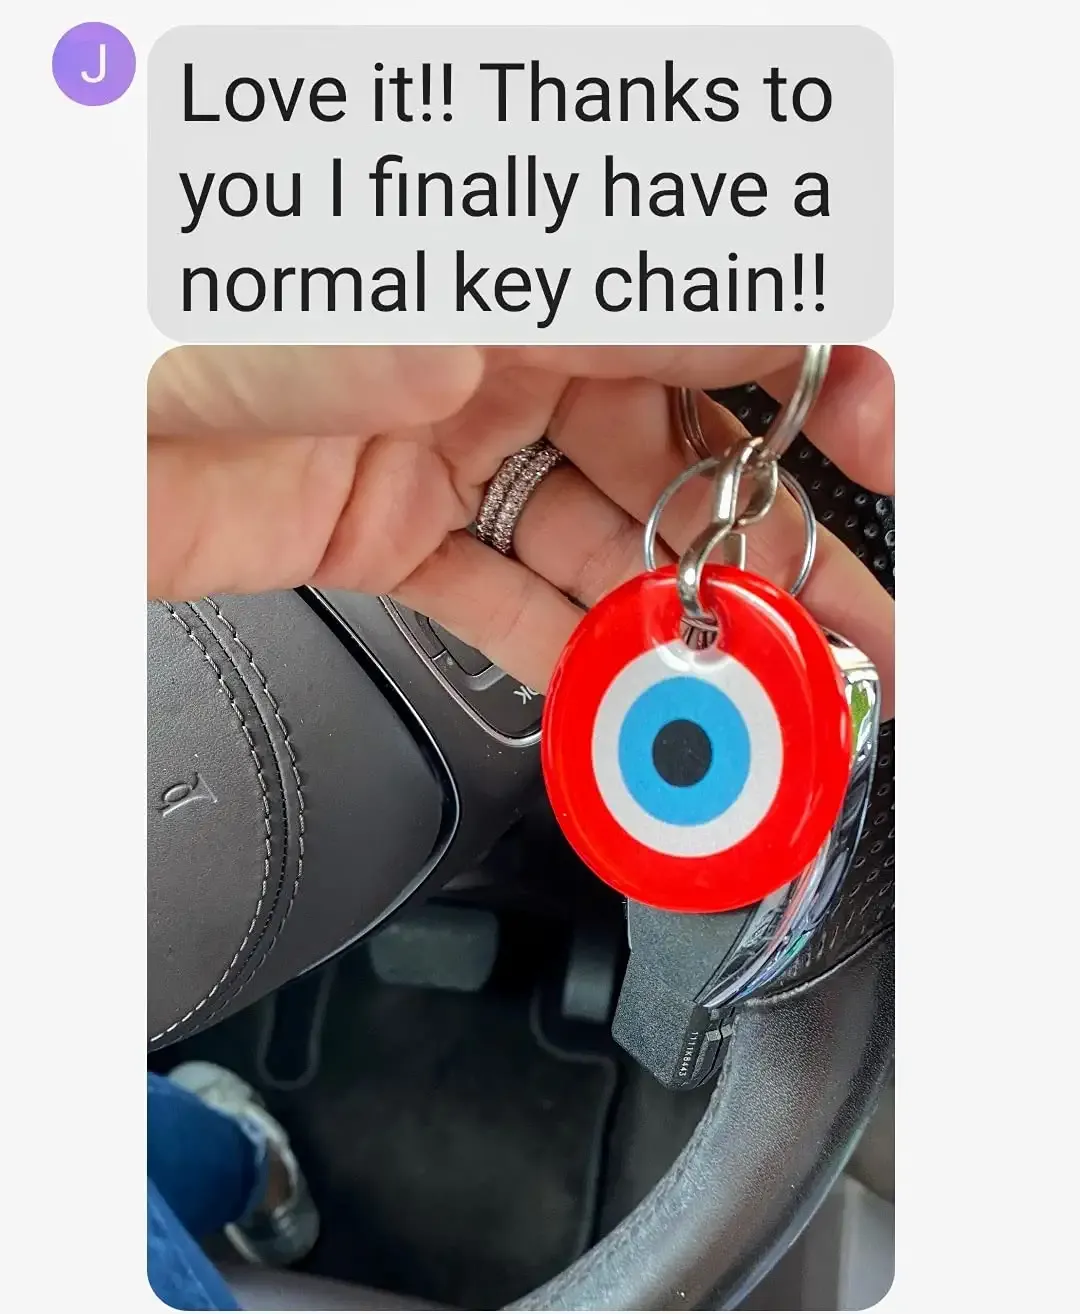 3ml evil eye keychain charm holder for women and men good luck colorful protection amulet for keys